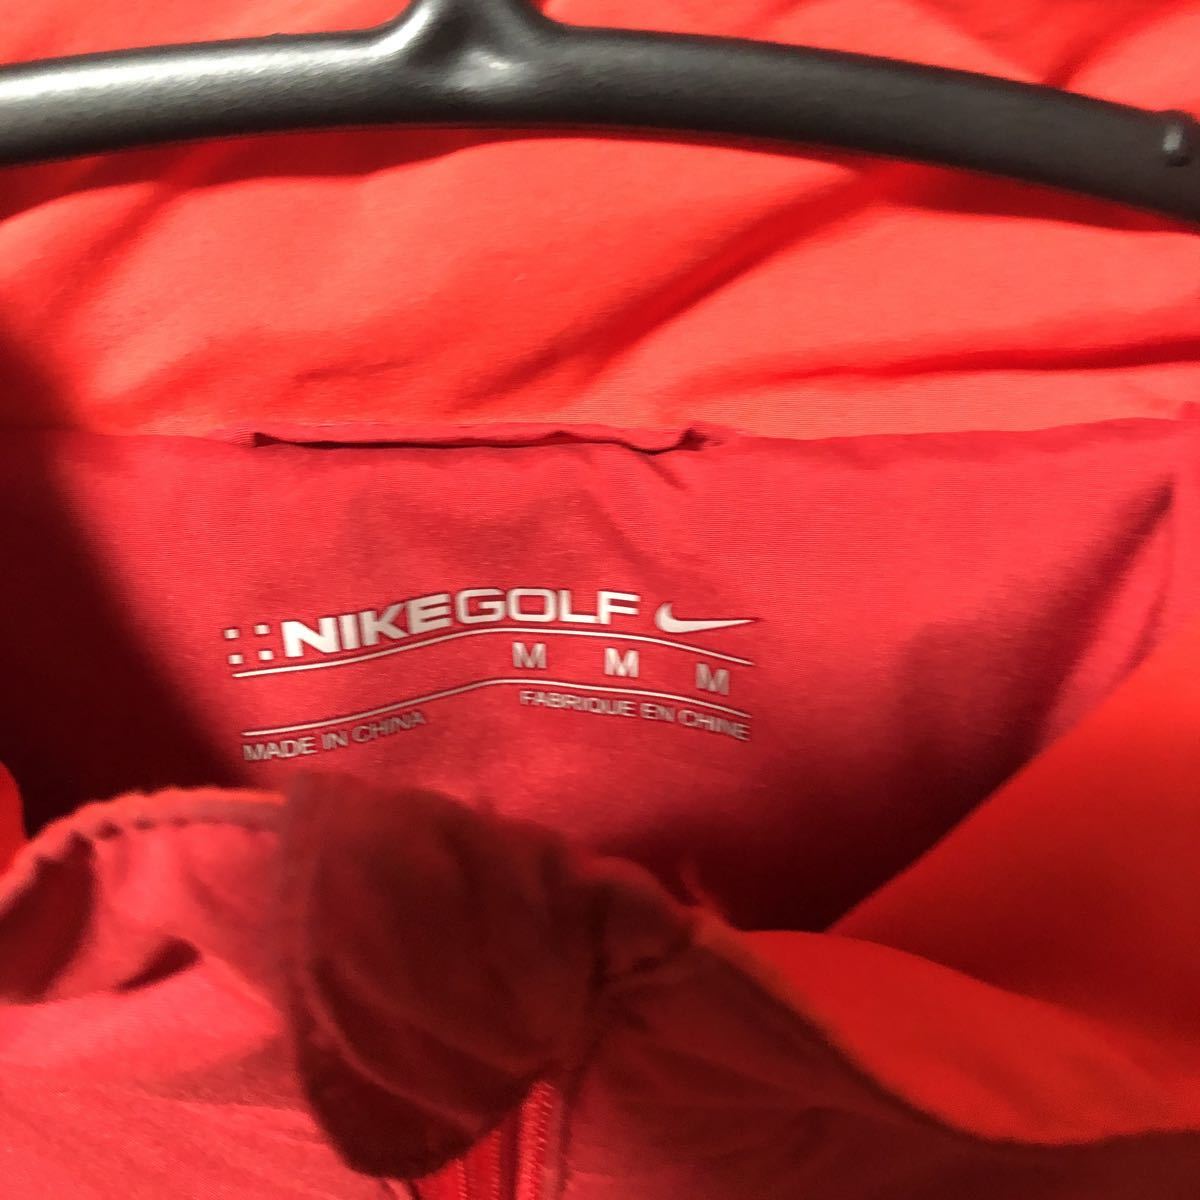 [NIKE GOLF] Nike Golf короткий рукав средний хлопчатник половина Zip жакет мужской M красный 